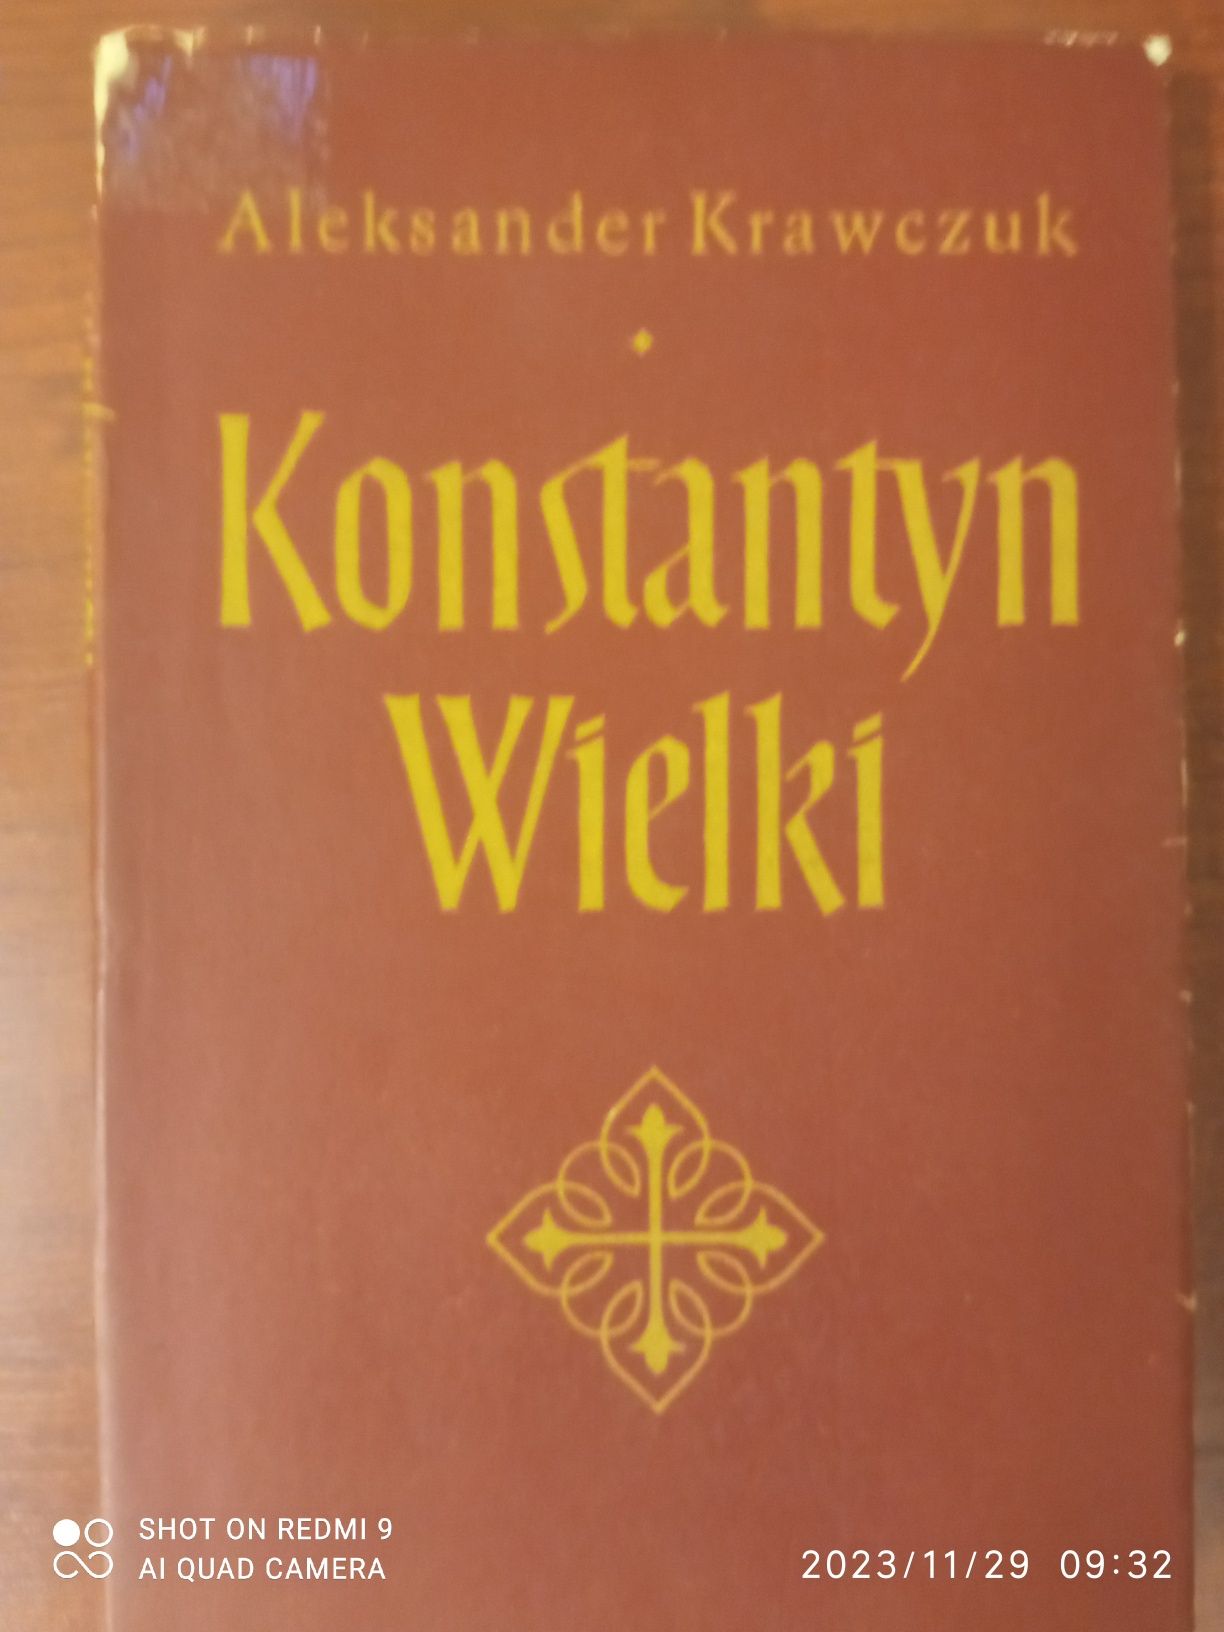 Konstant6n Wielki książka A.Krawczuk